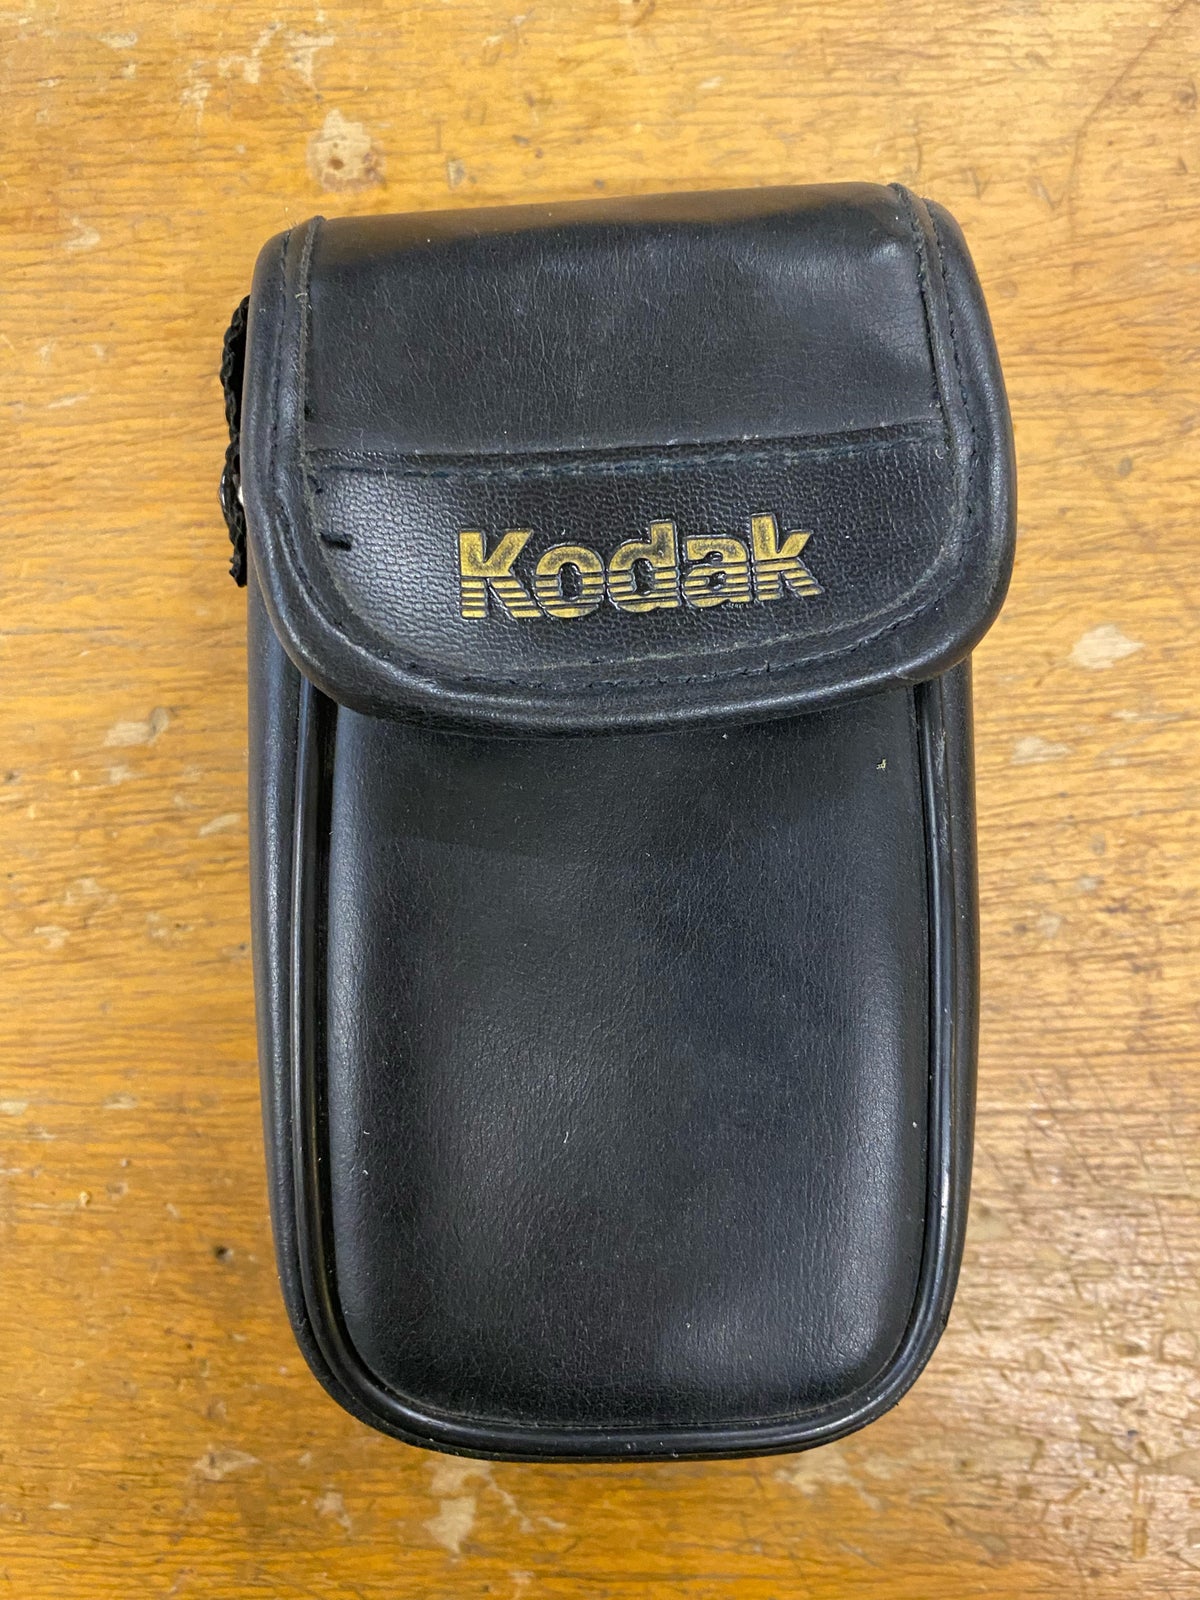 Kodak, Star 1075z, God